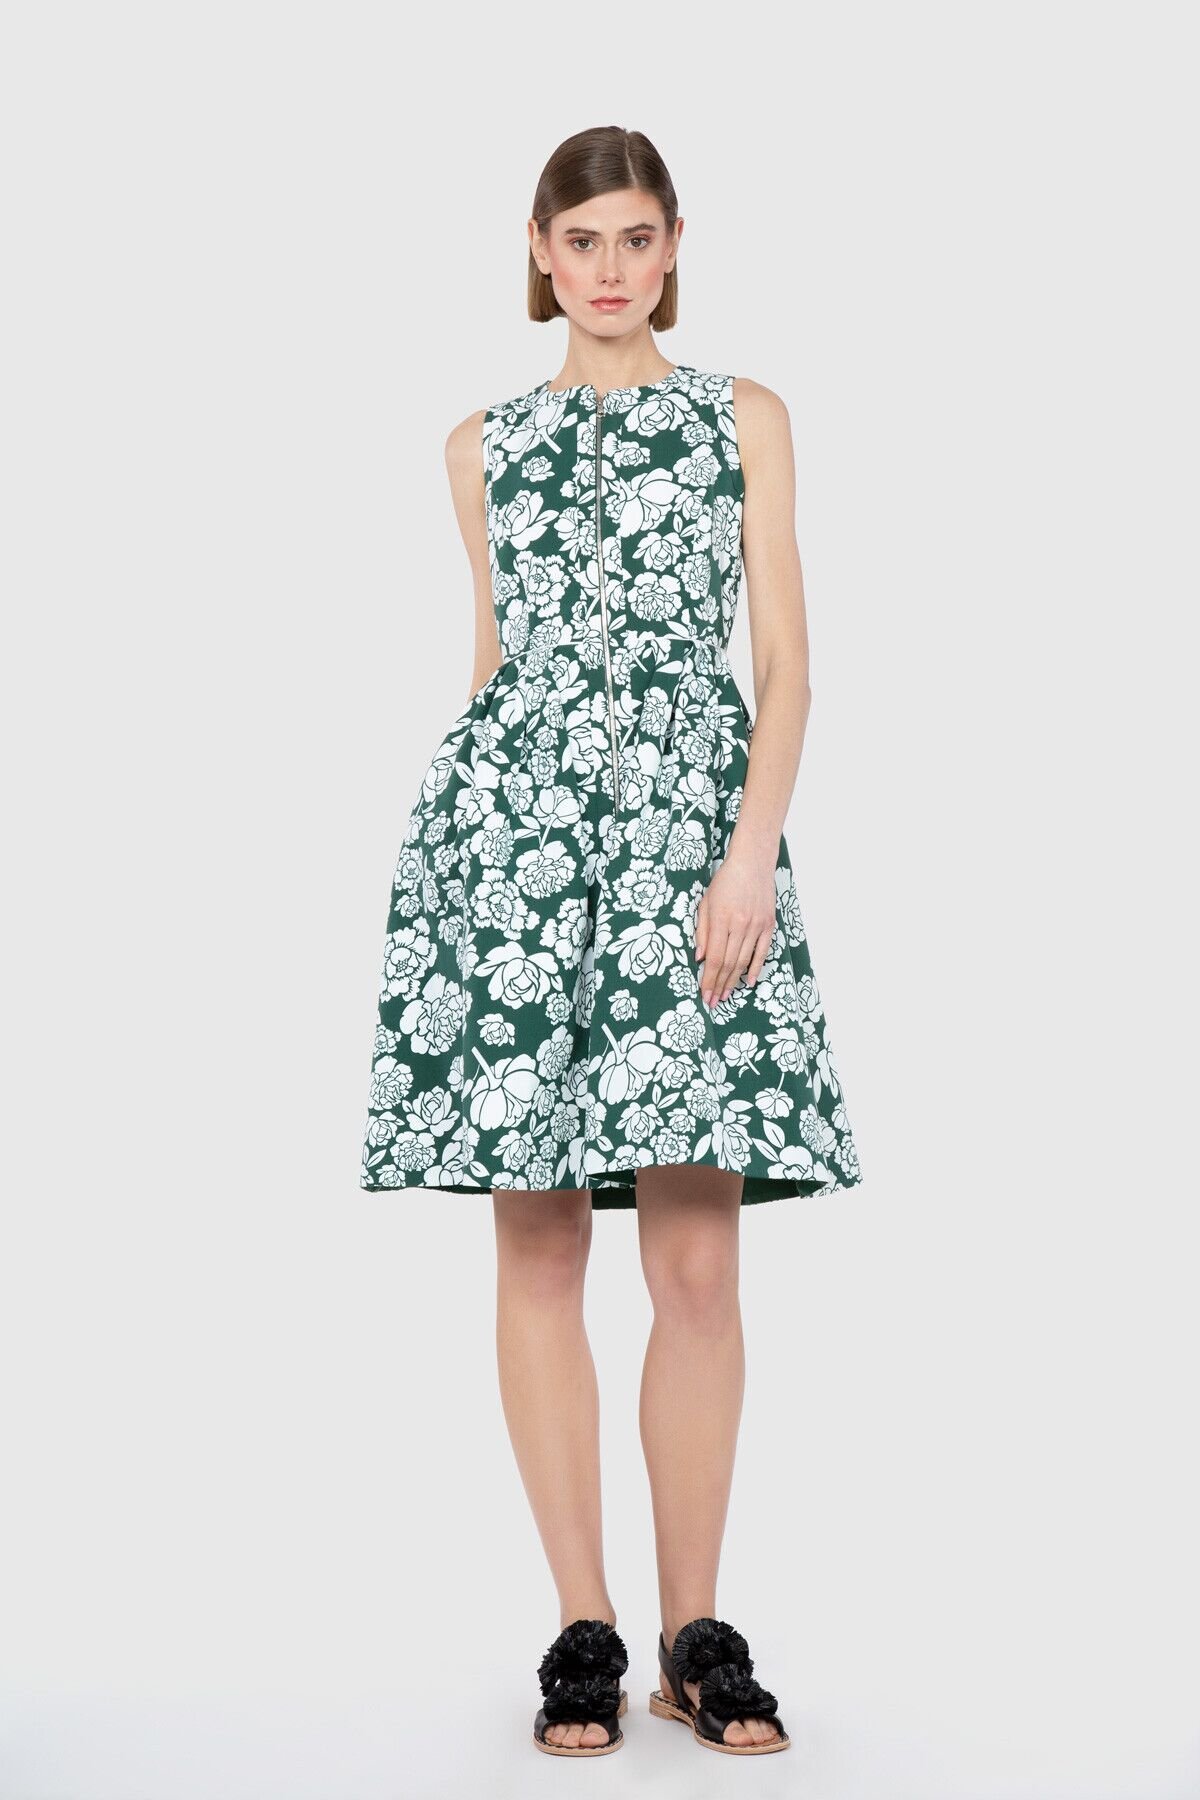 Floral Patterned Voluminous Skirt Form Above Knee Dress